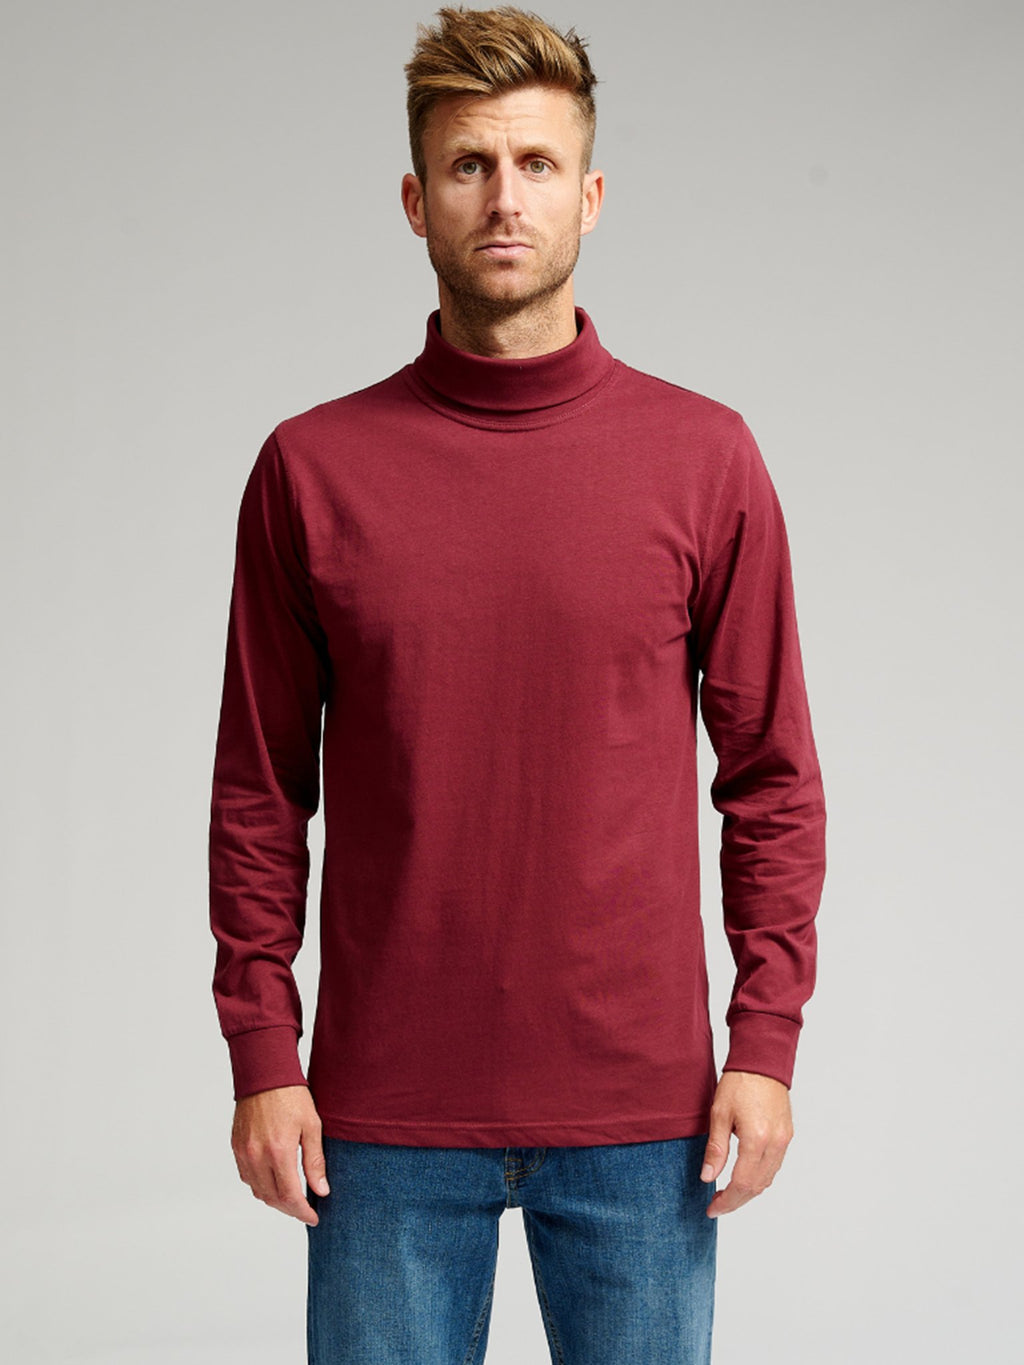 Roll collar sweater - Burgundy Red